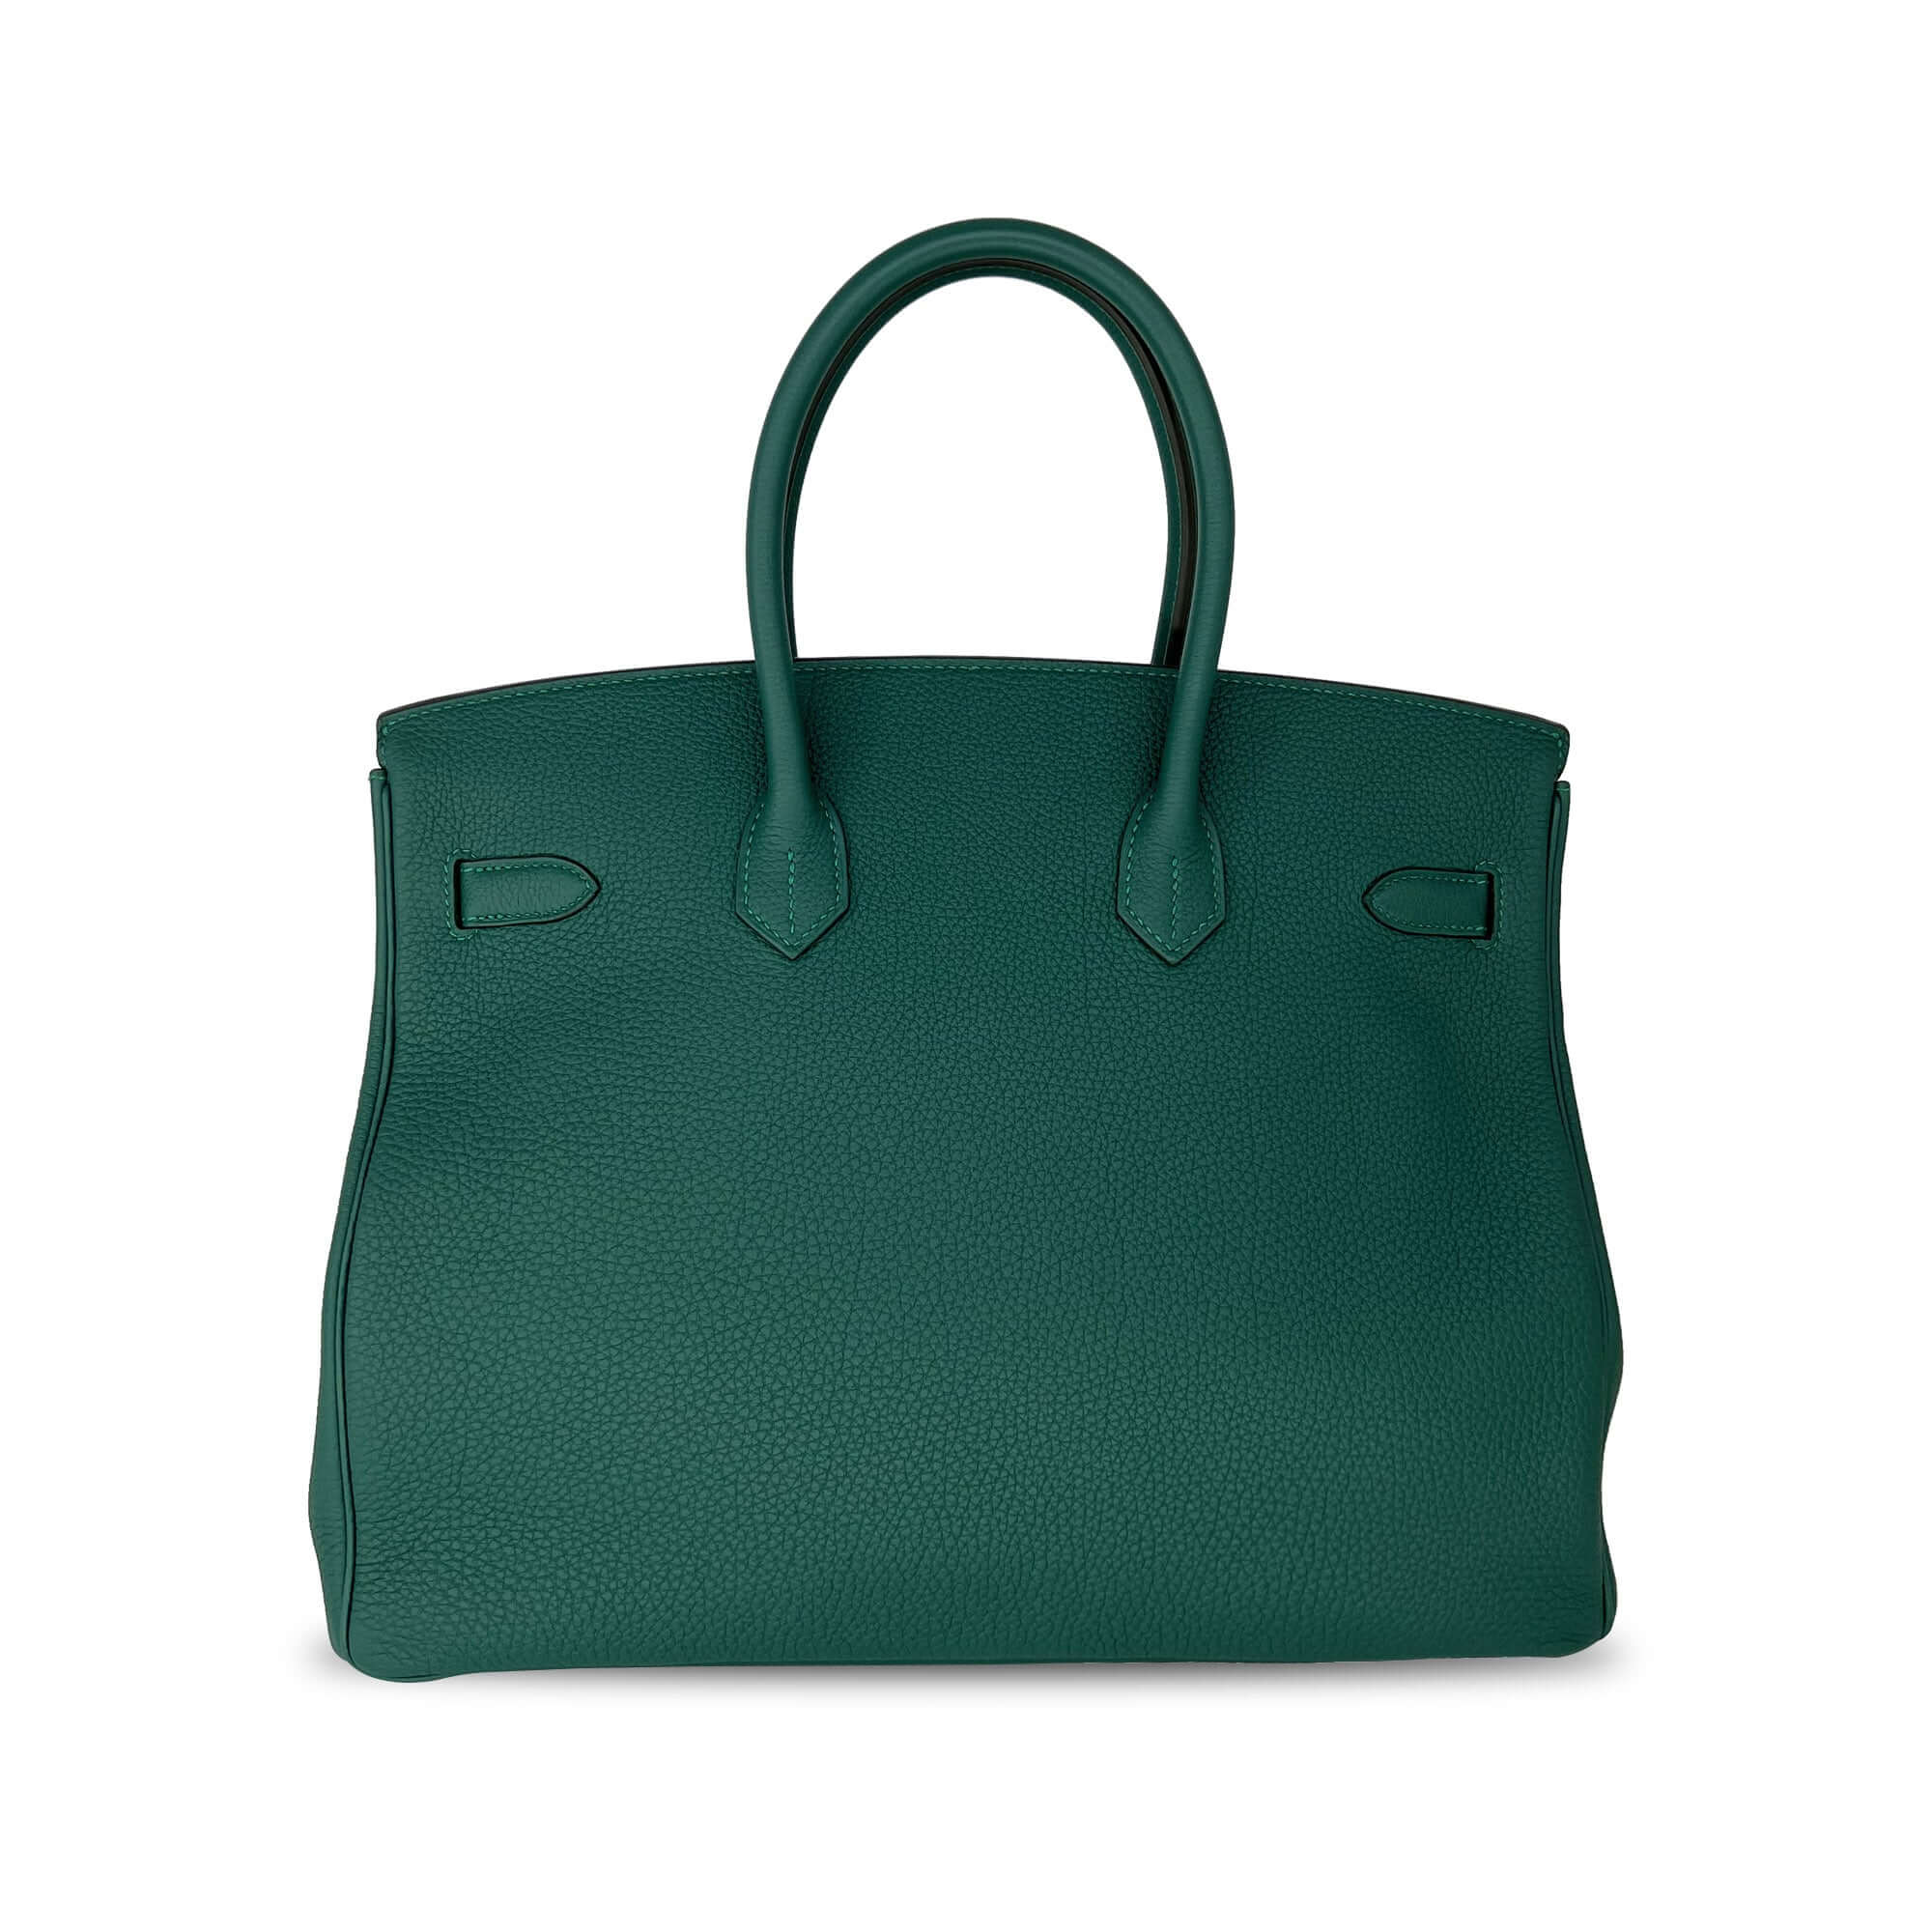  Hermes Birkin Malachite Togo Designer Bag back